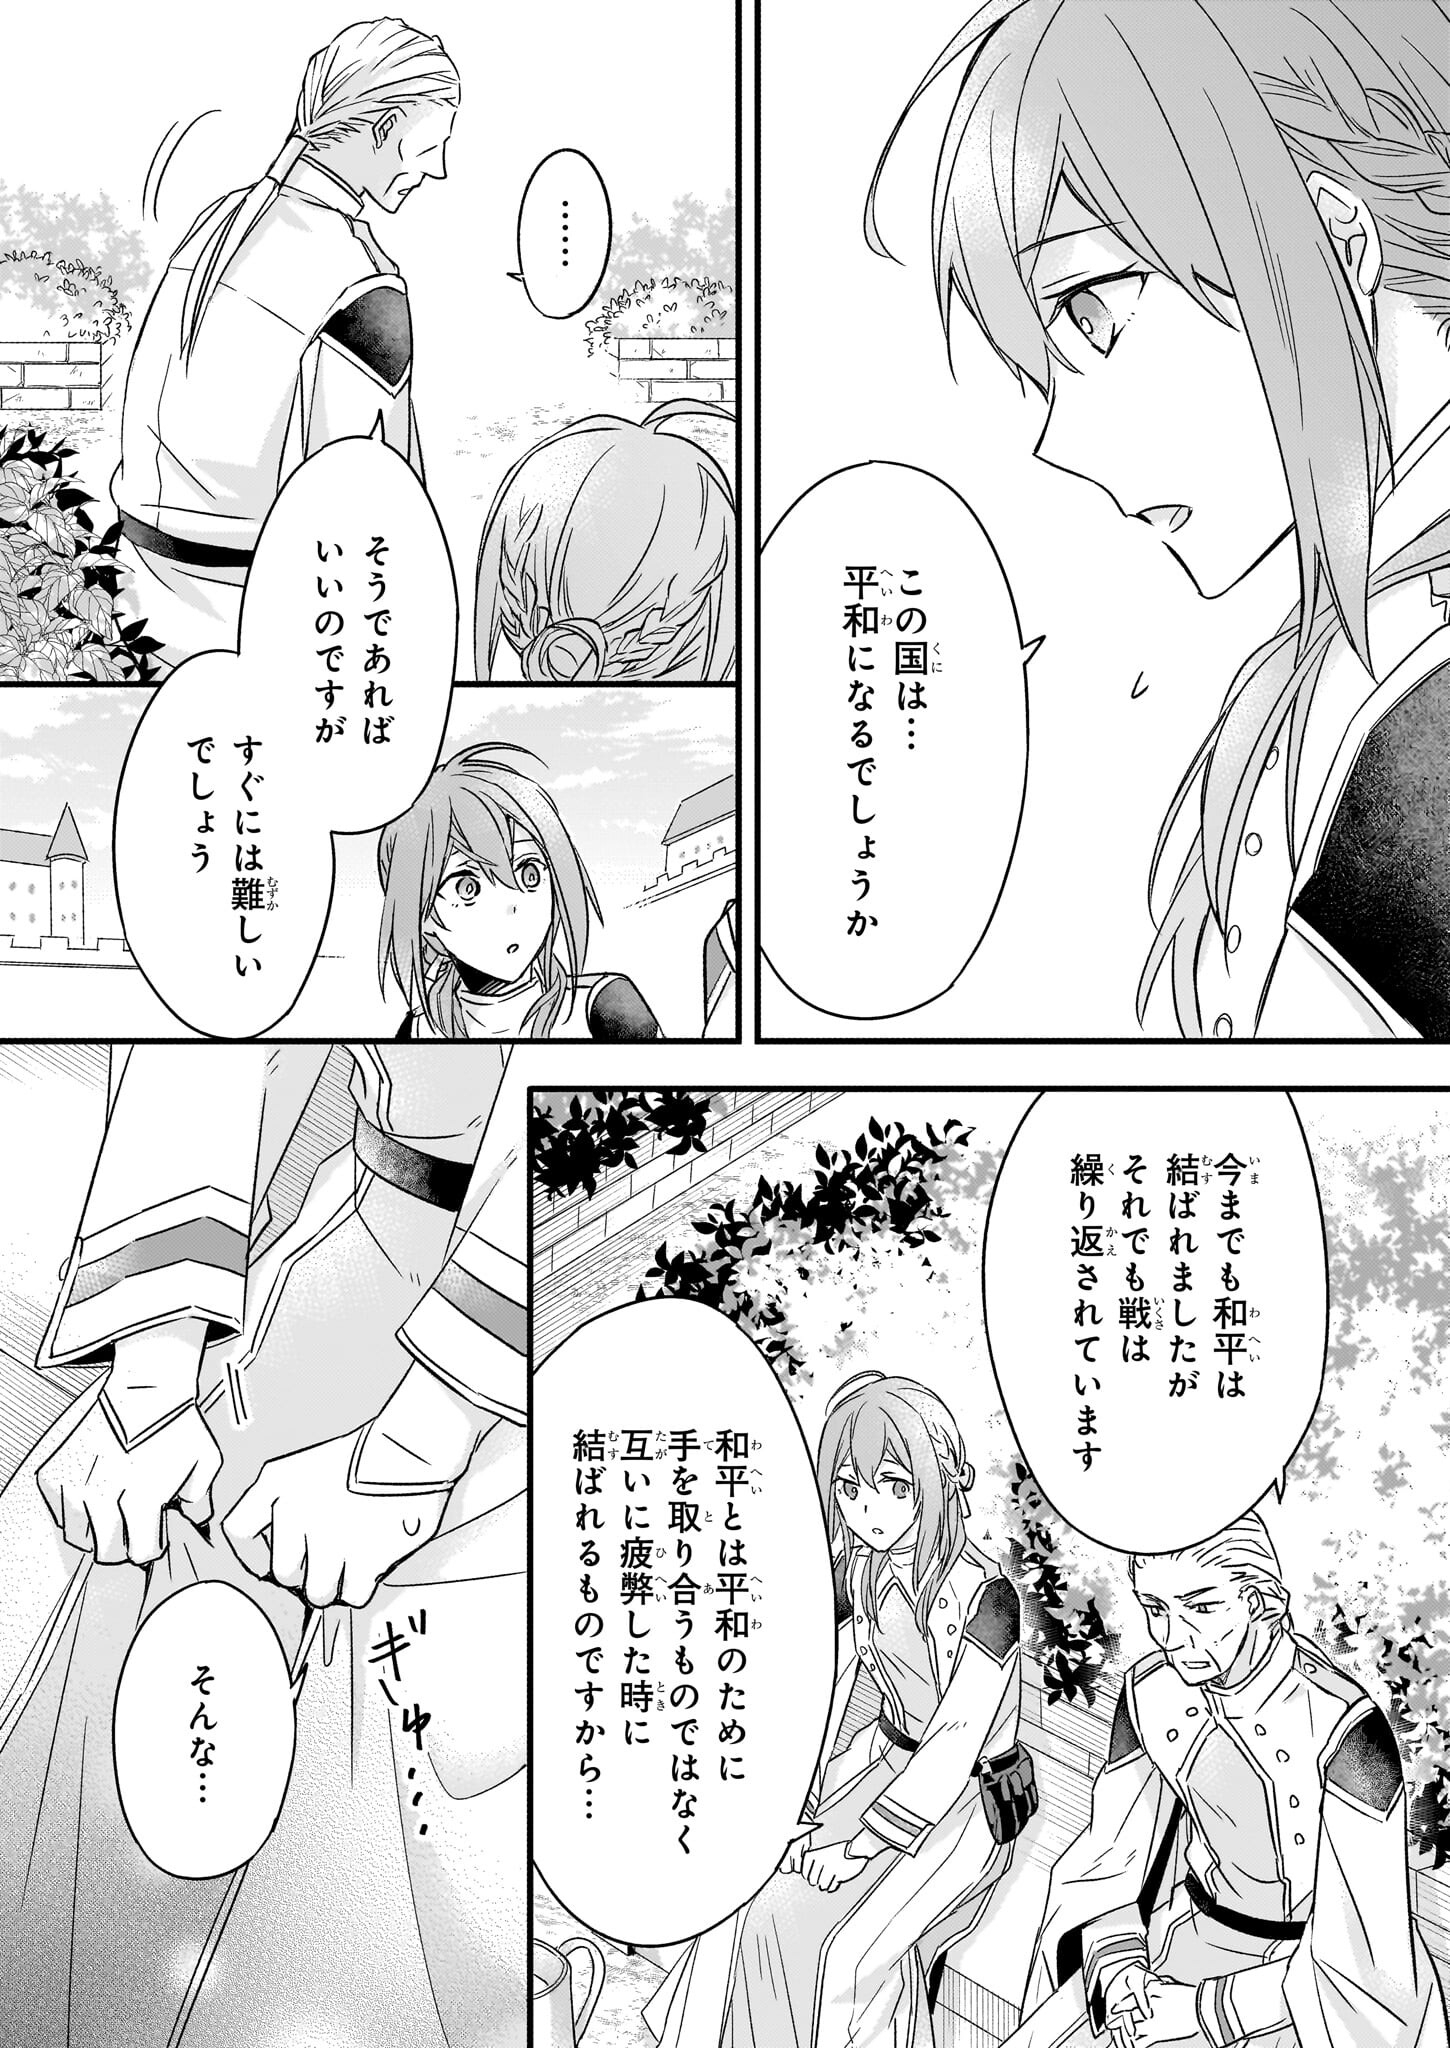 Gaikotsu Ou to Migawari no Oujo – Luna to Okubyou na Ousama - Chapter 5 - Page 3